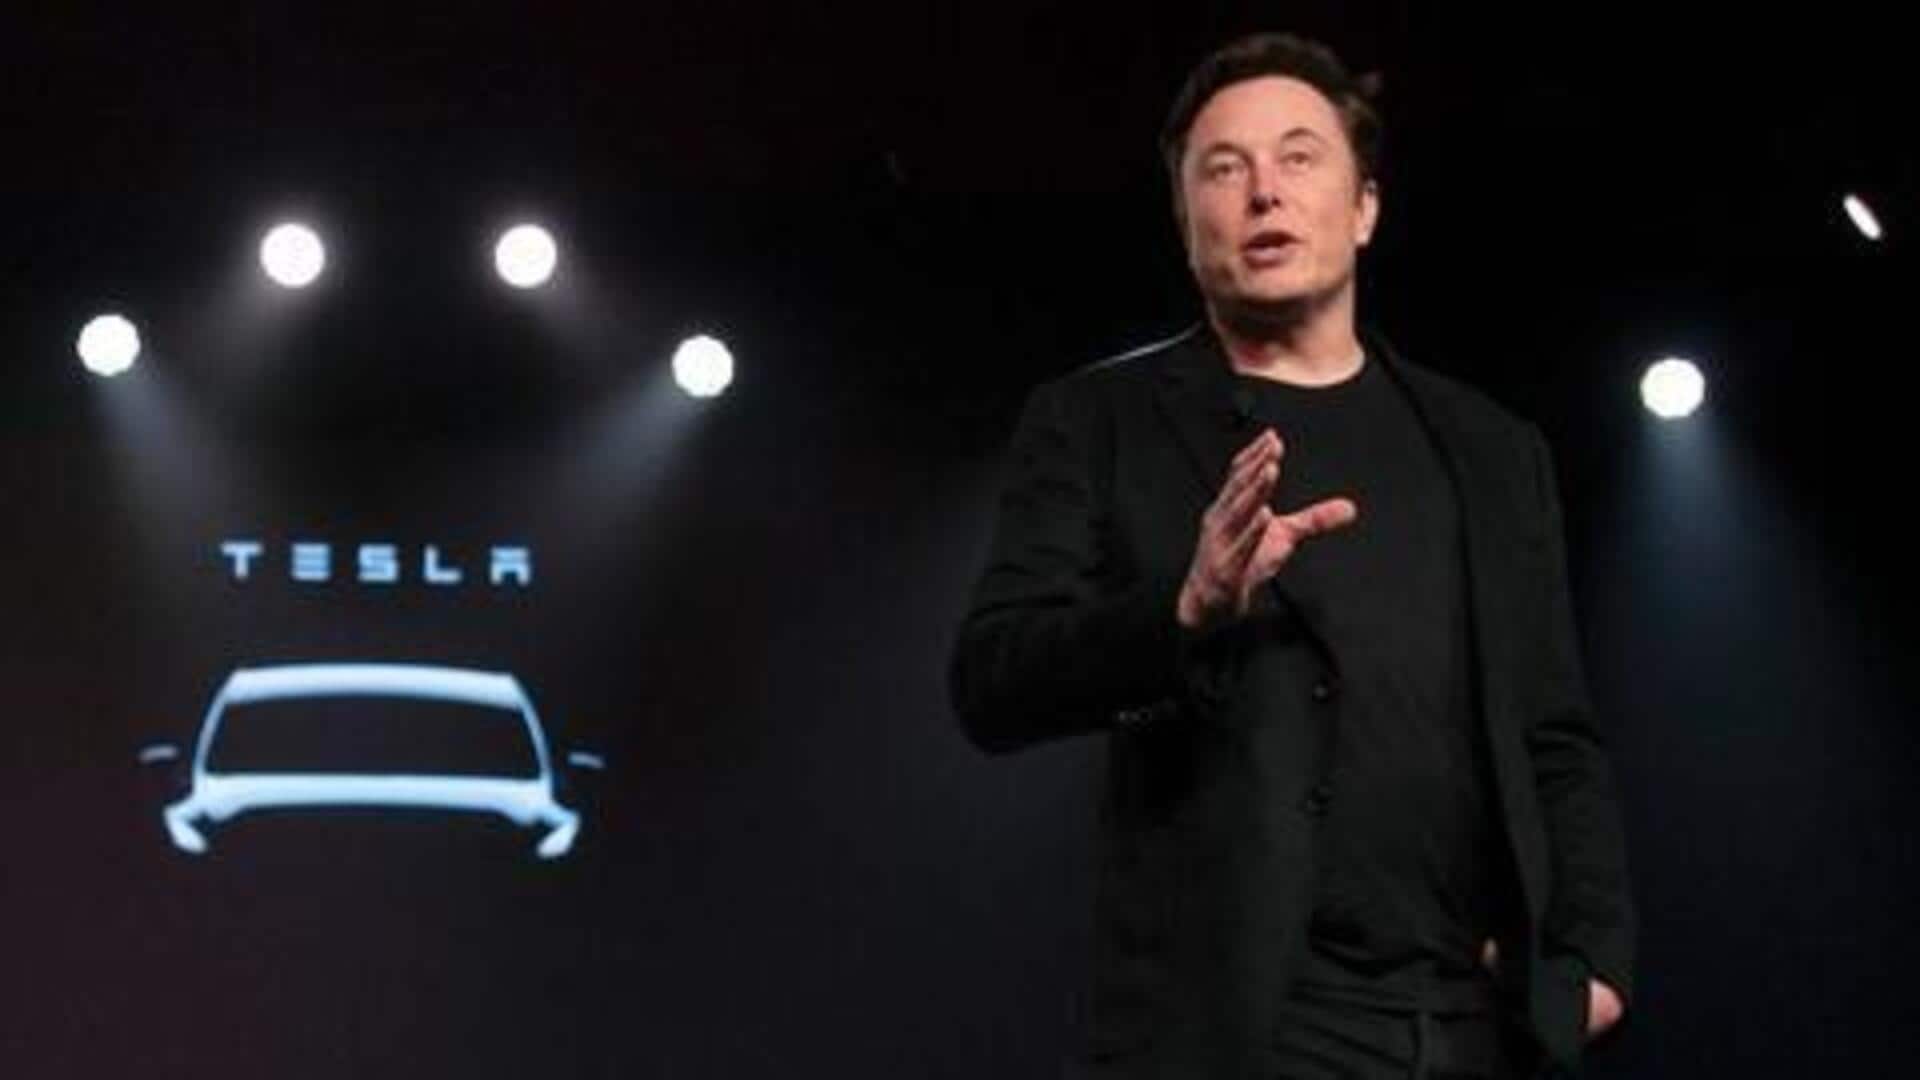 Musk's $56B Tesla compensation: Shareholder vote won't reverse judge's decision